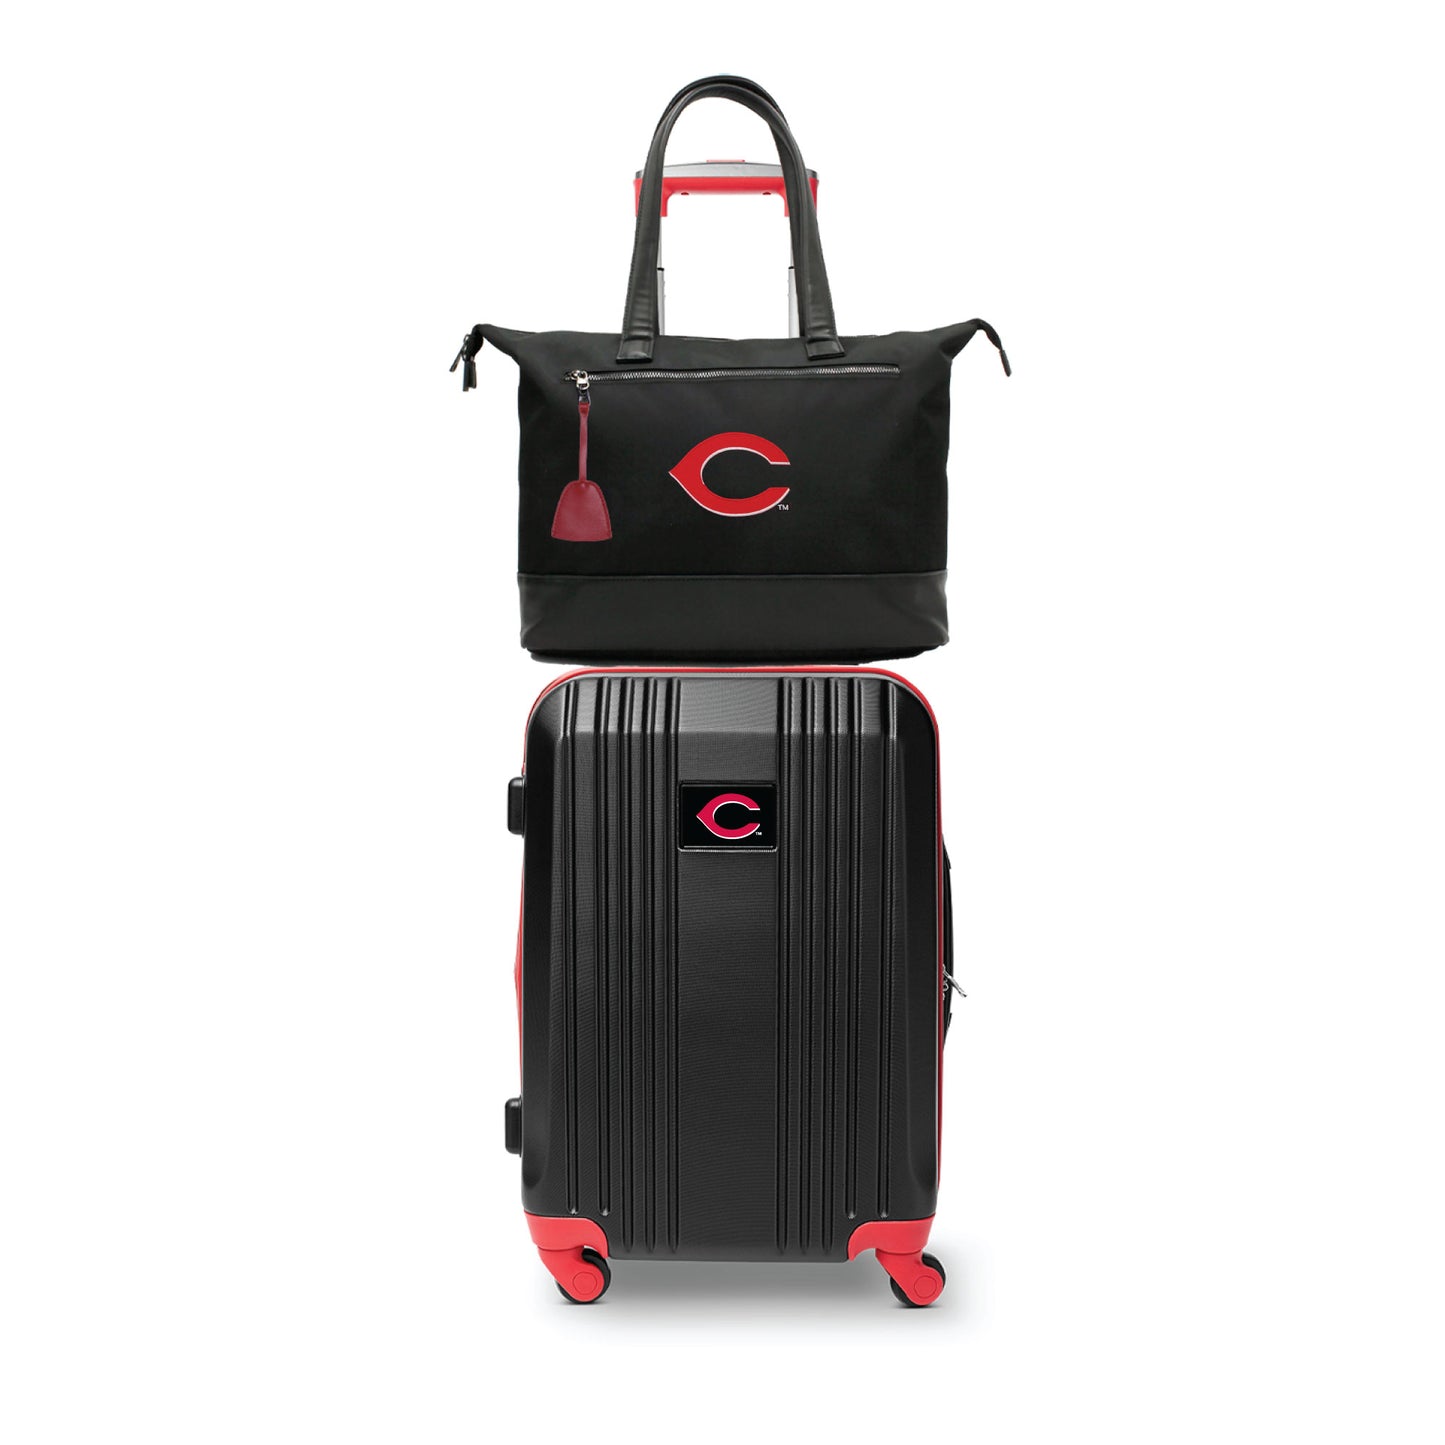 Cincinnati Reds Premium Laptop Tote Bag and Luggage Set